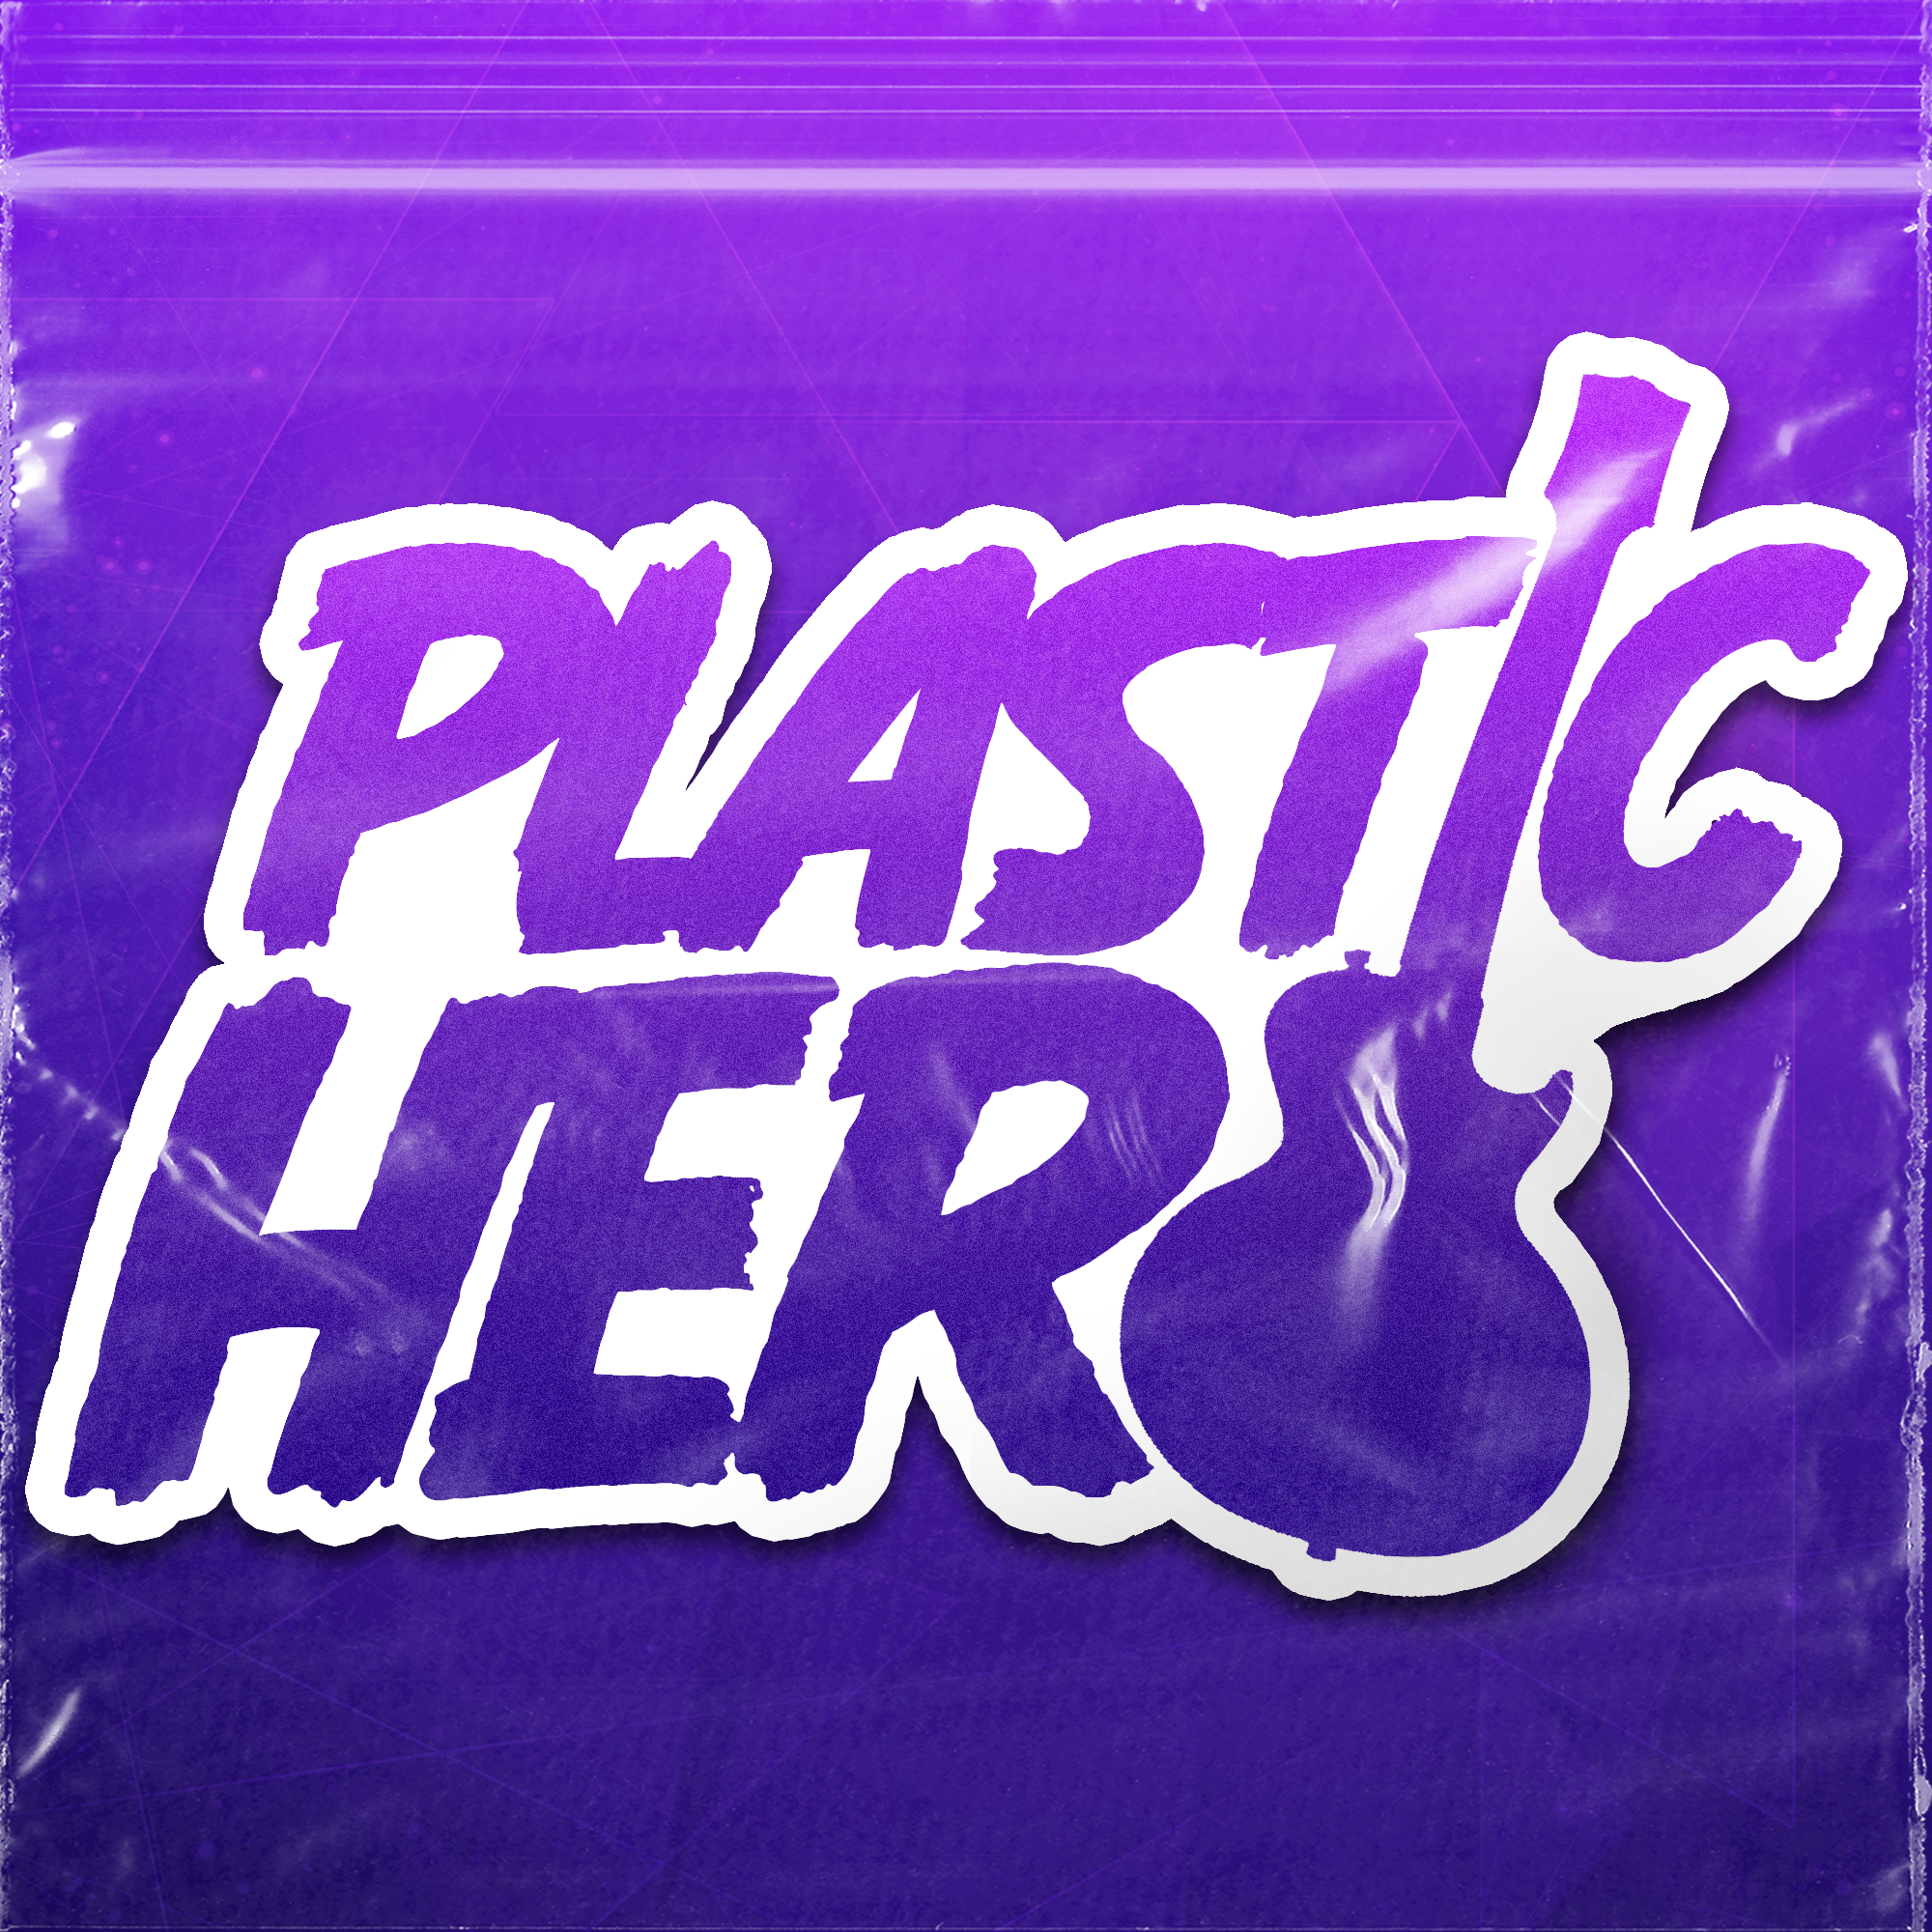 Plastic Hero 